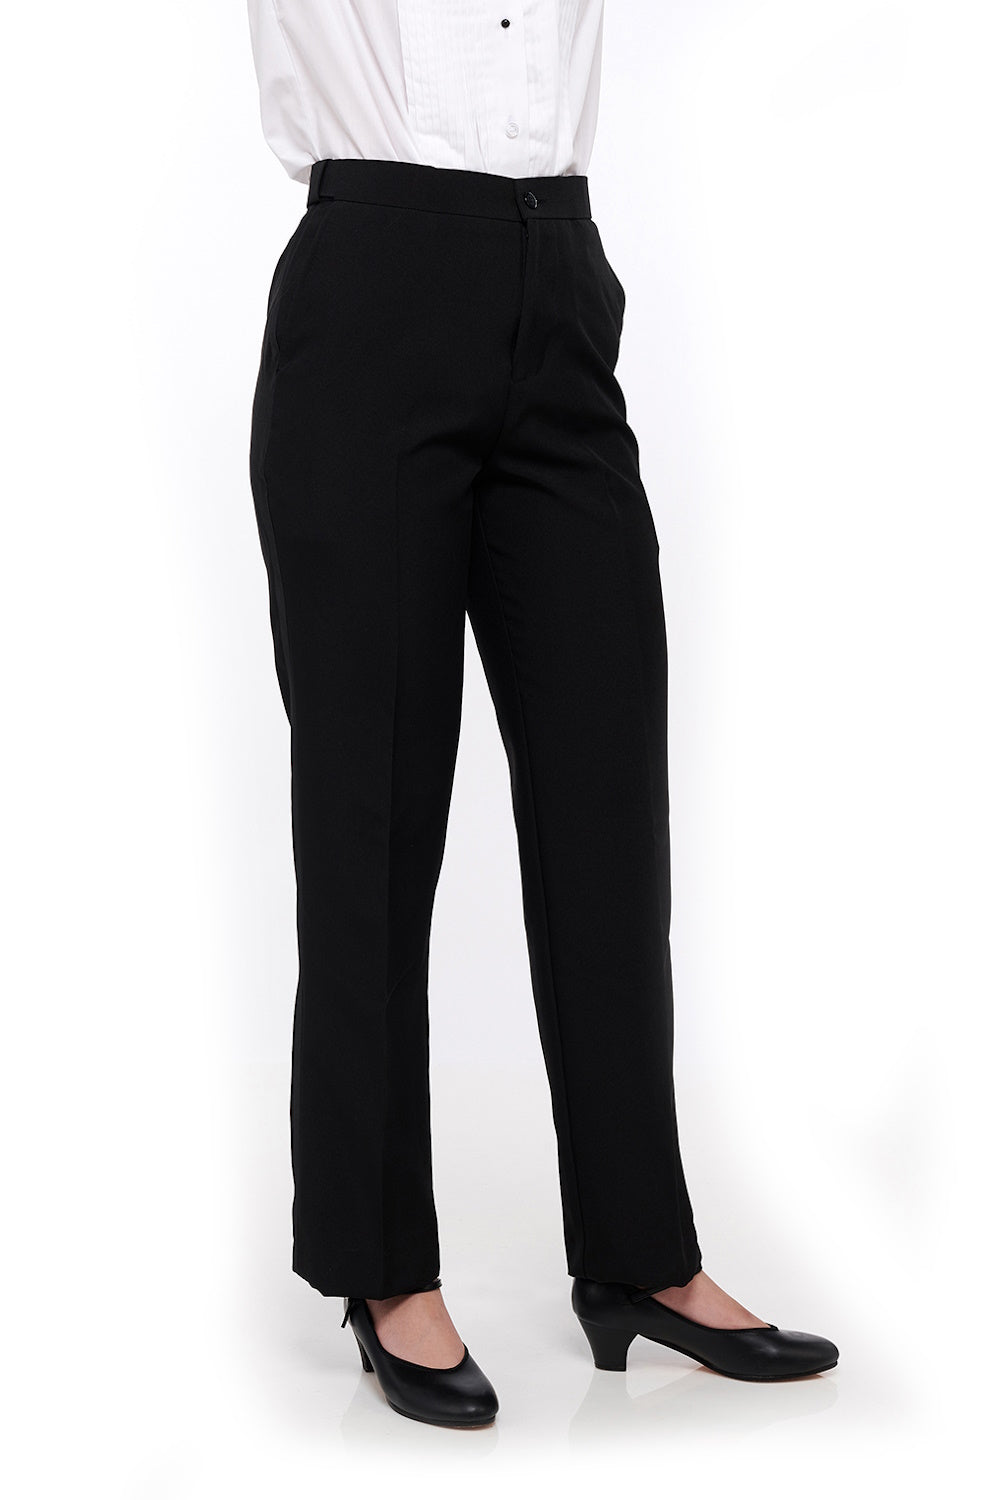 Womens Pants by ebay  Pants for women Pants Women